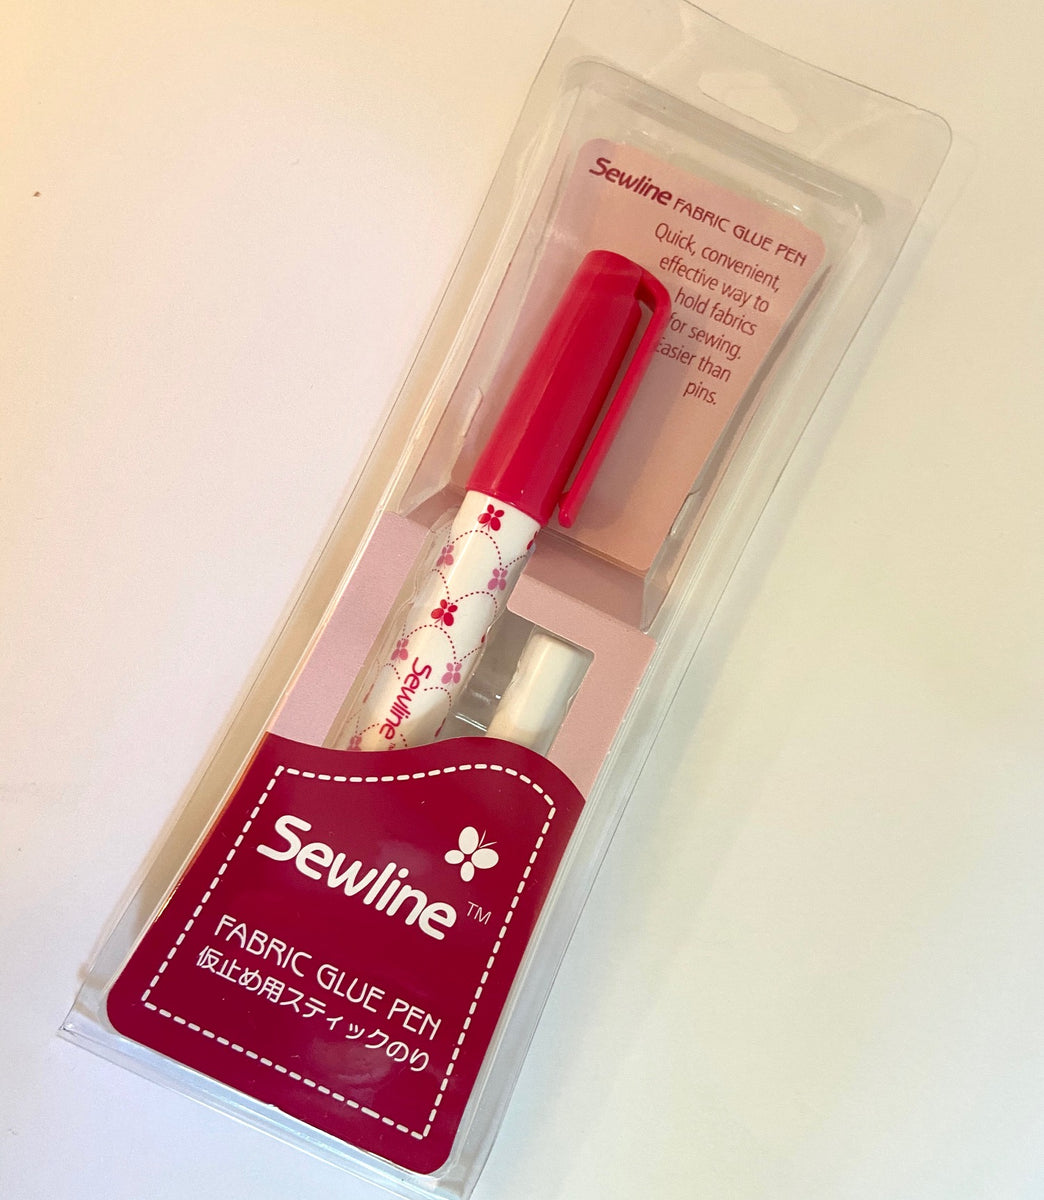 Sewline Fabric Glue Pen – Morris Textiles